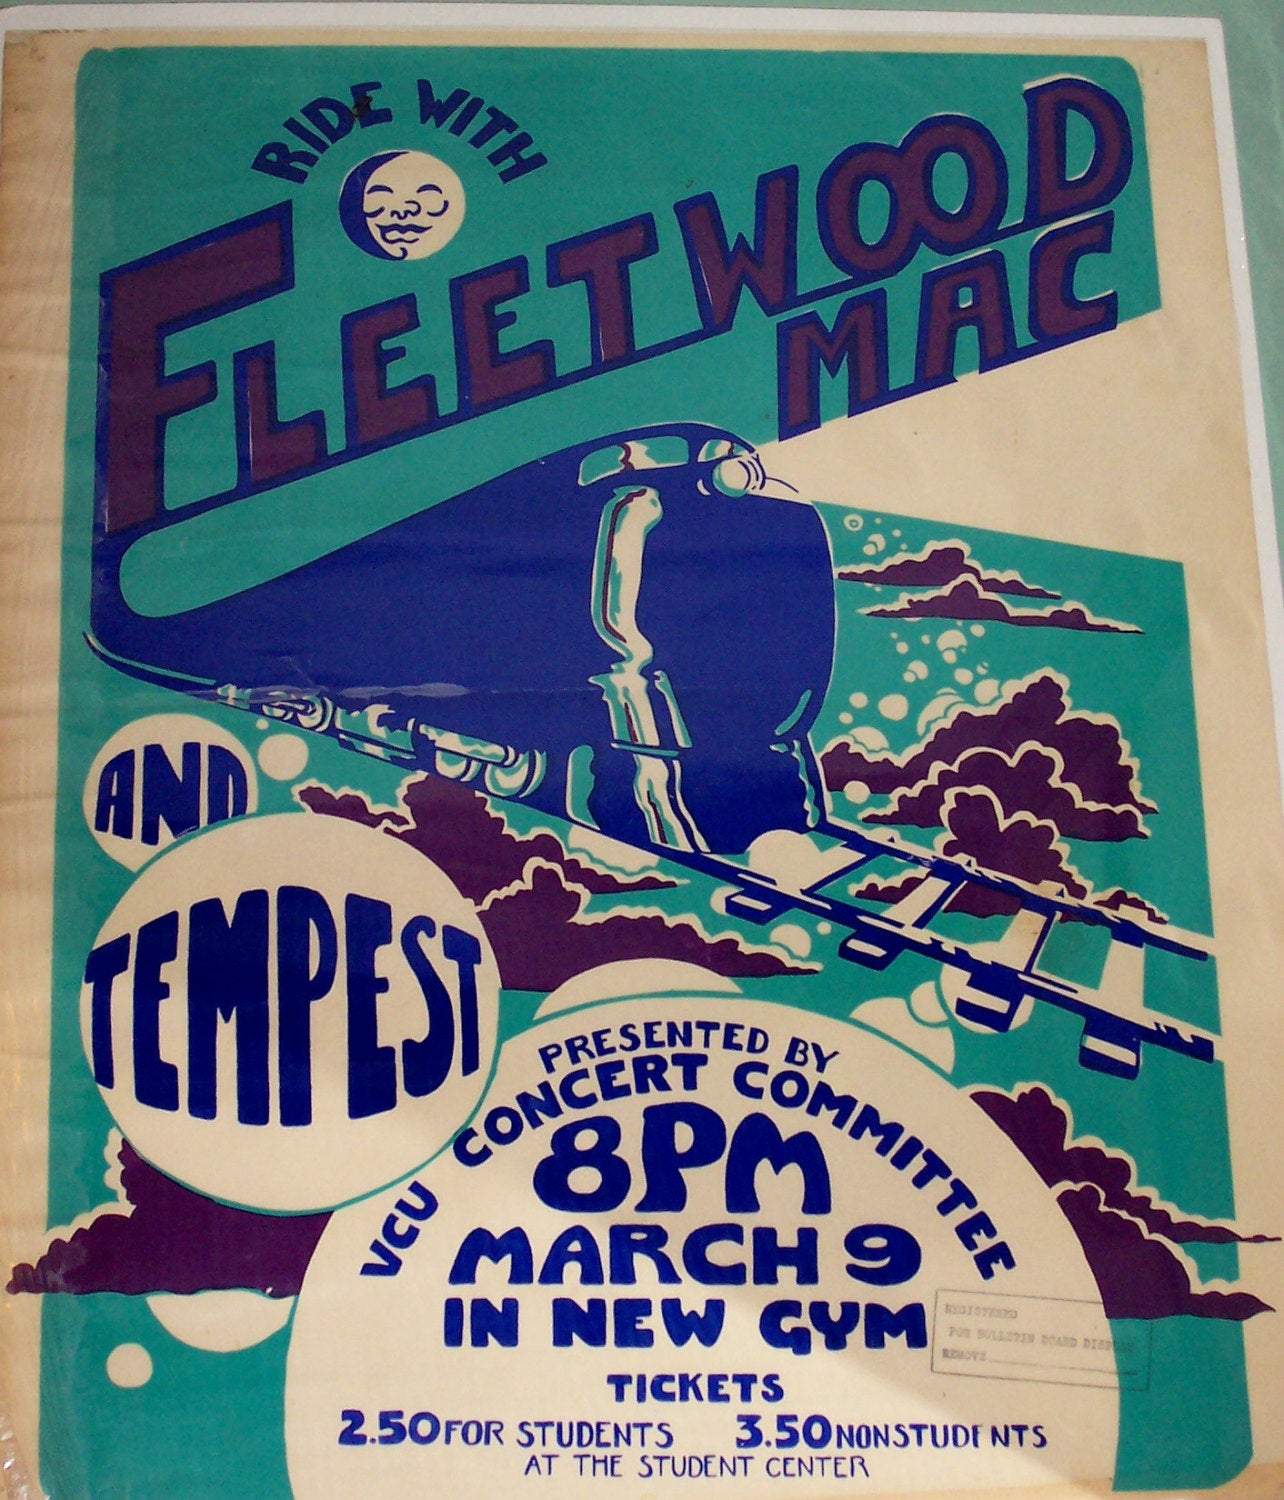 Vintage Music Art Poster - Fleetwood Mac 0542